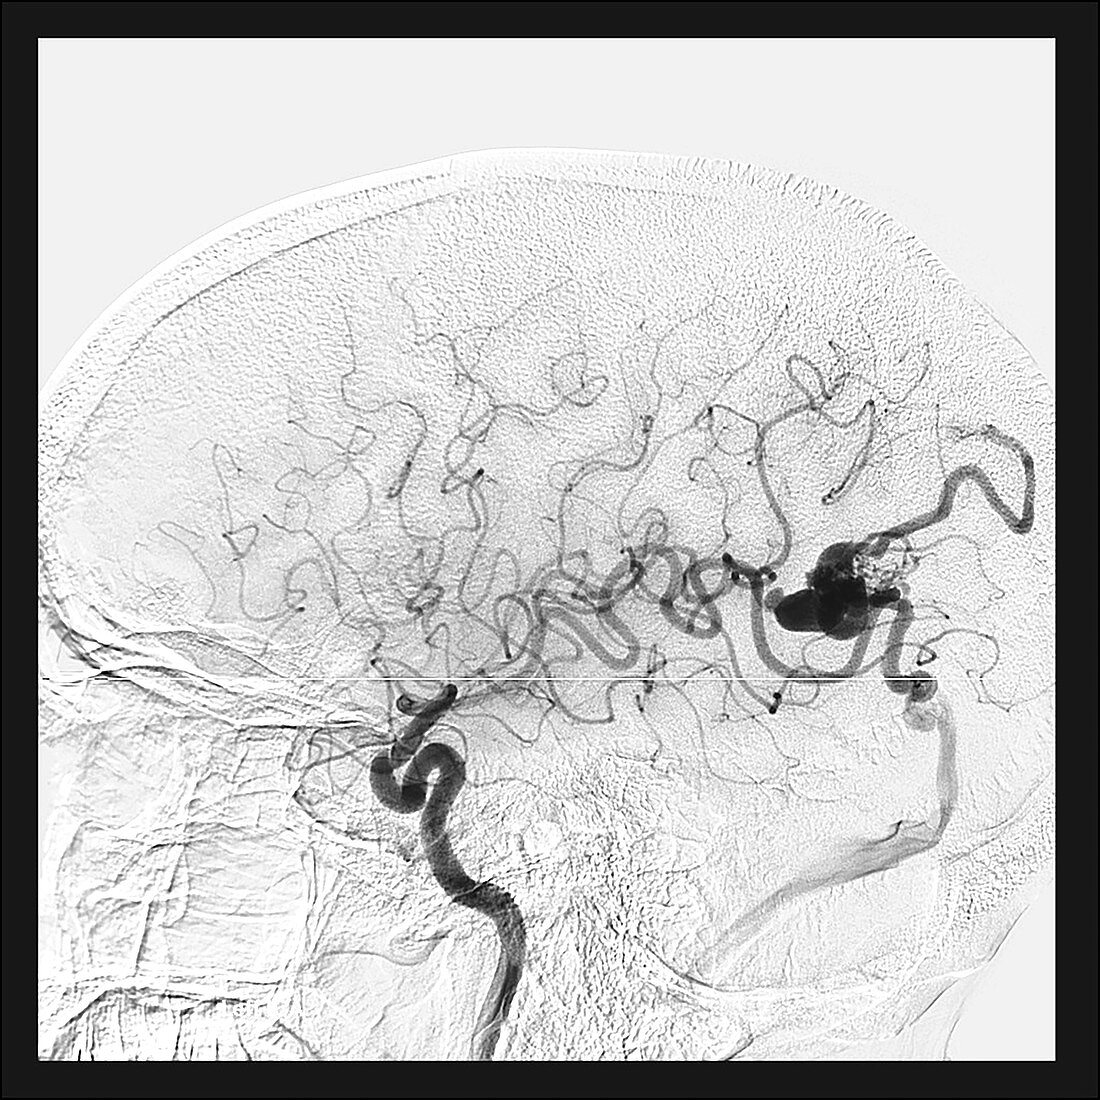 Parietal Lobe AVM, Angiogram